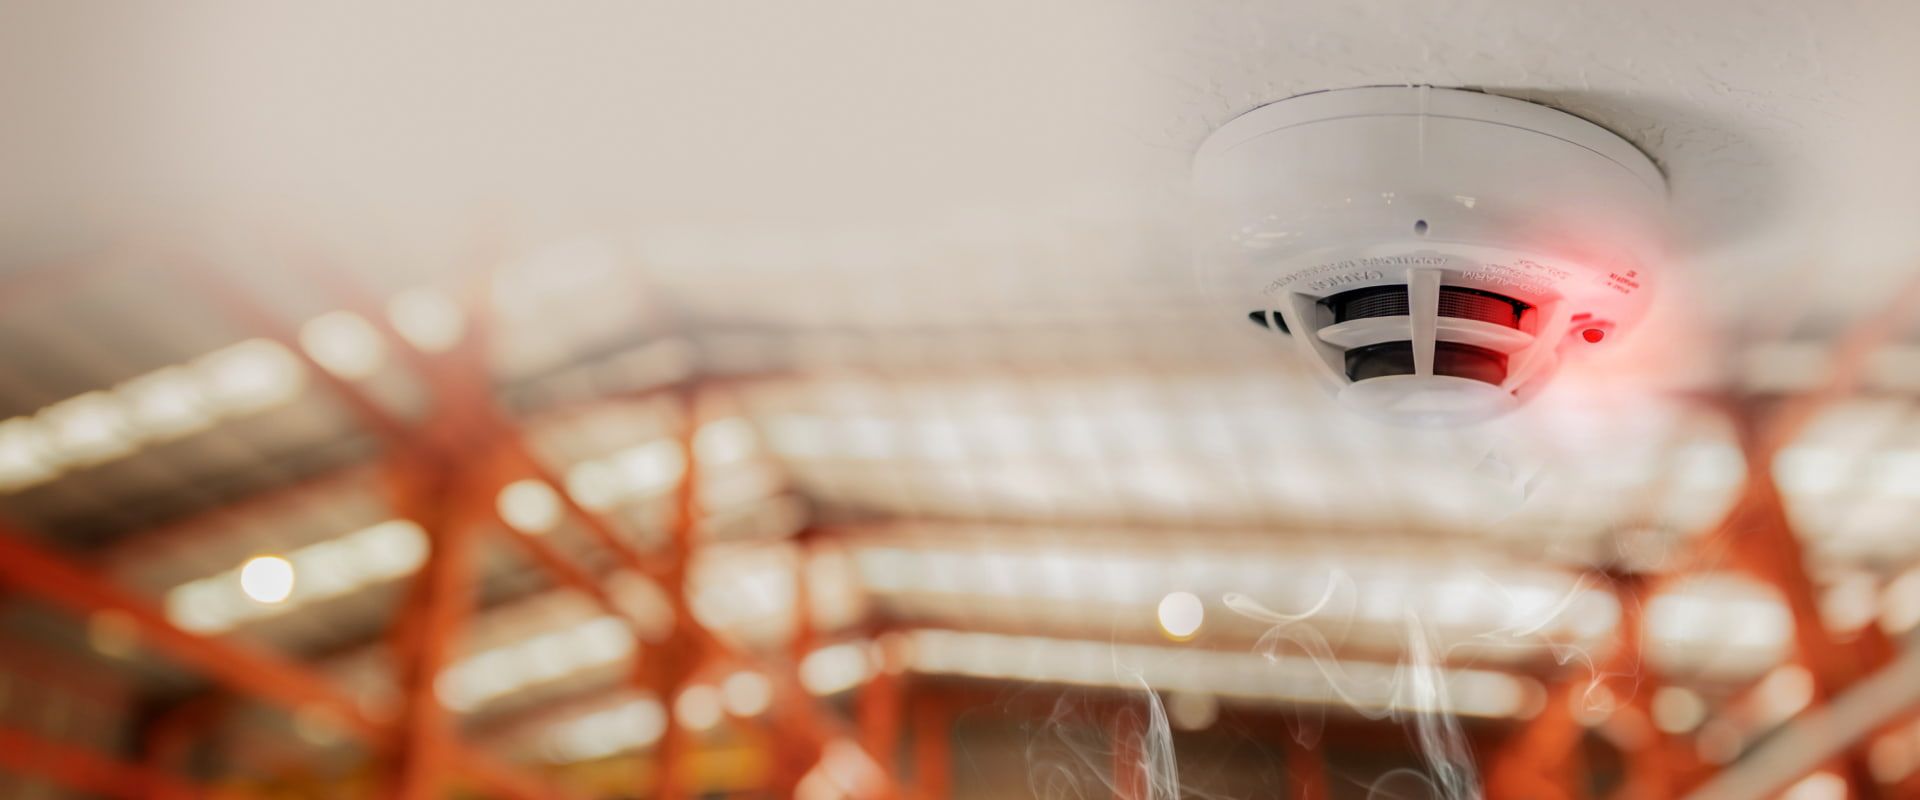 carbon monoxide alarm beeps service provider cornerstone protection